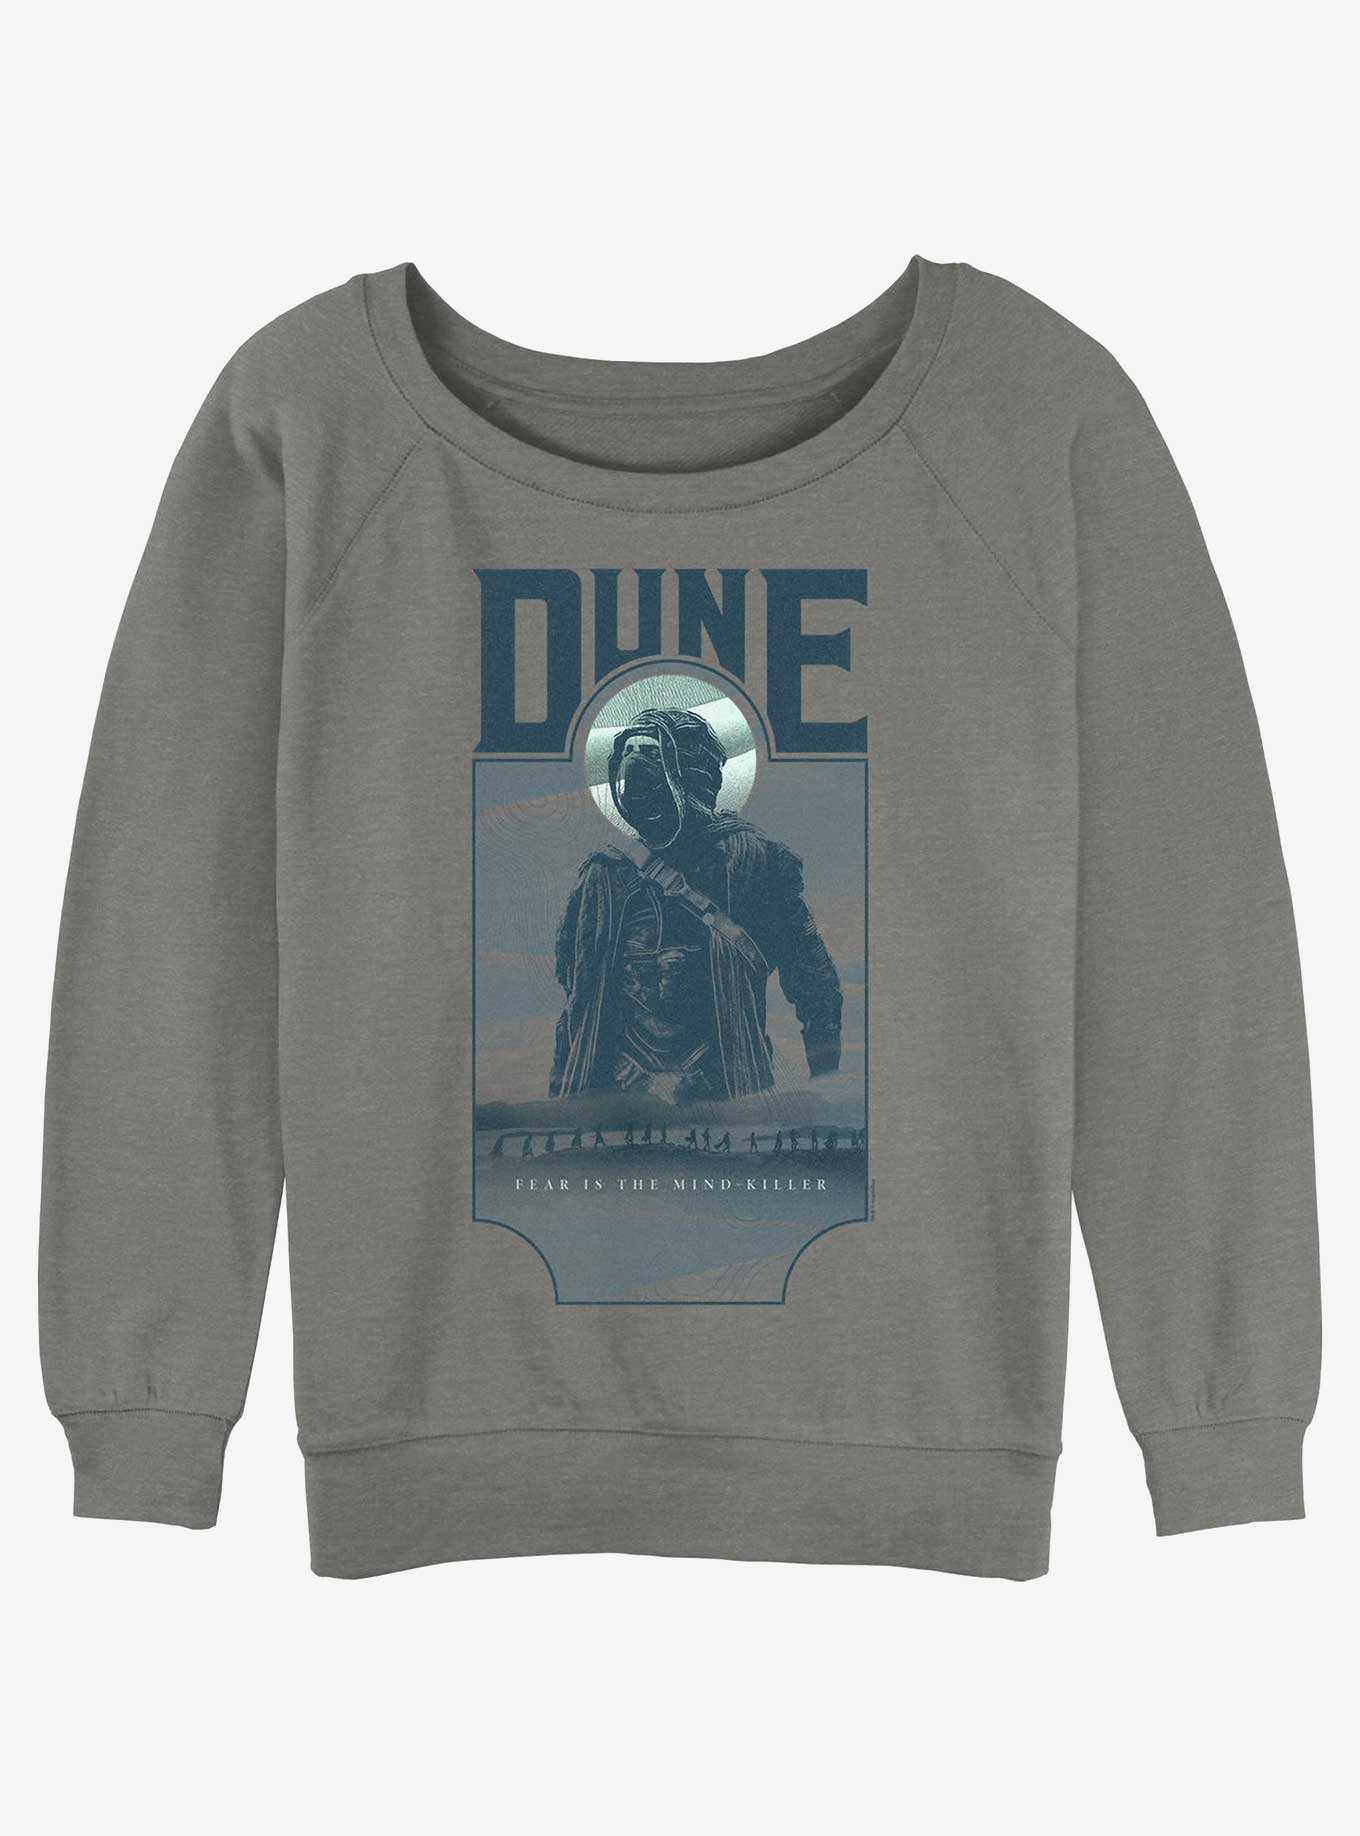 Dune Paul Of Arrakis Womens Slouchy Sweatshirt, , hi-res